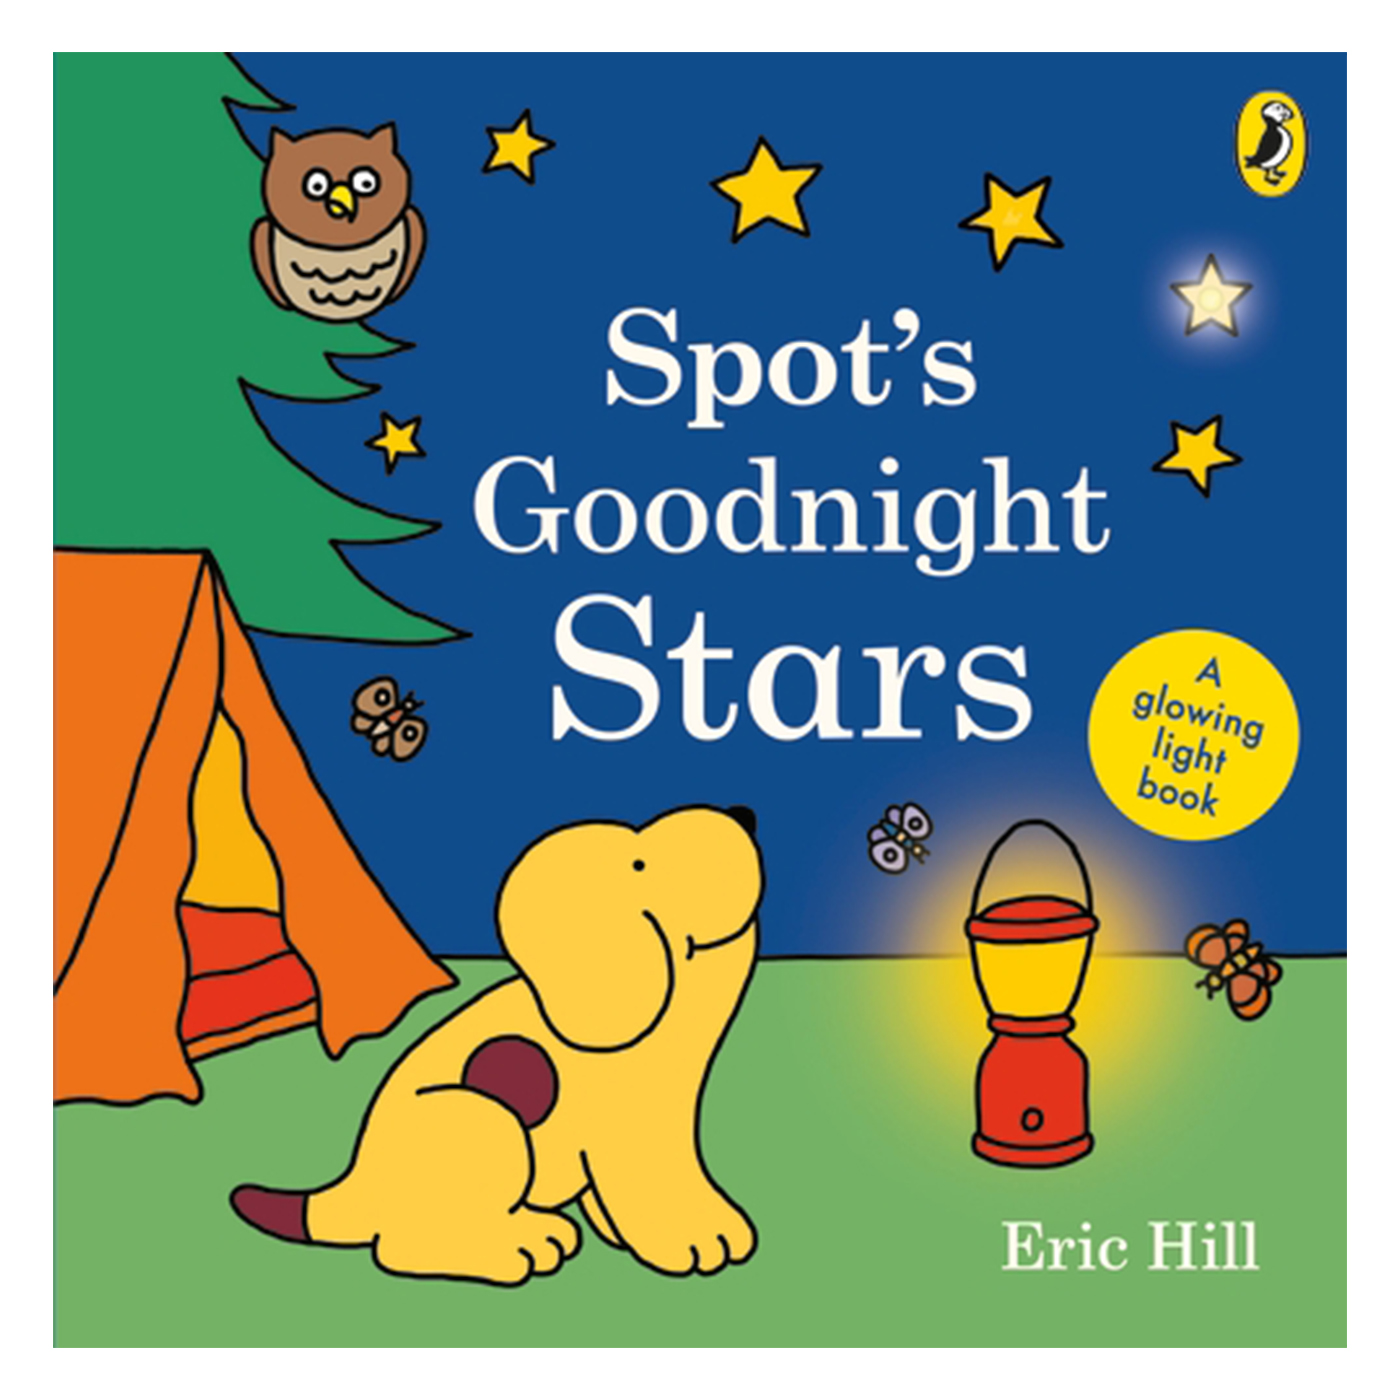  Spot's Goodnight Stars